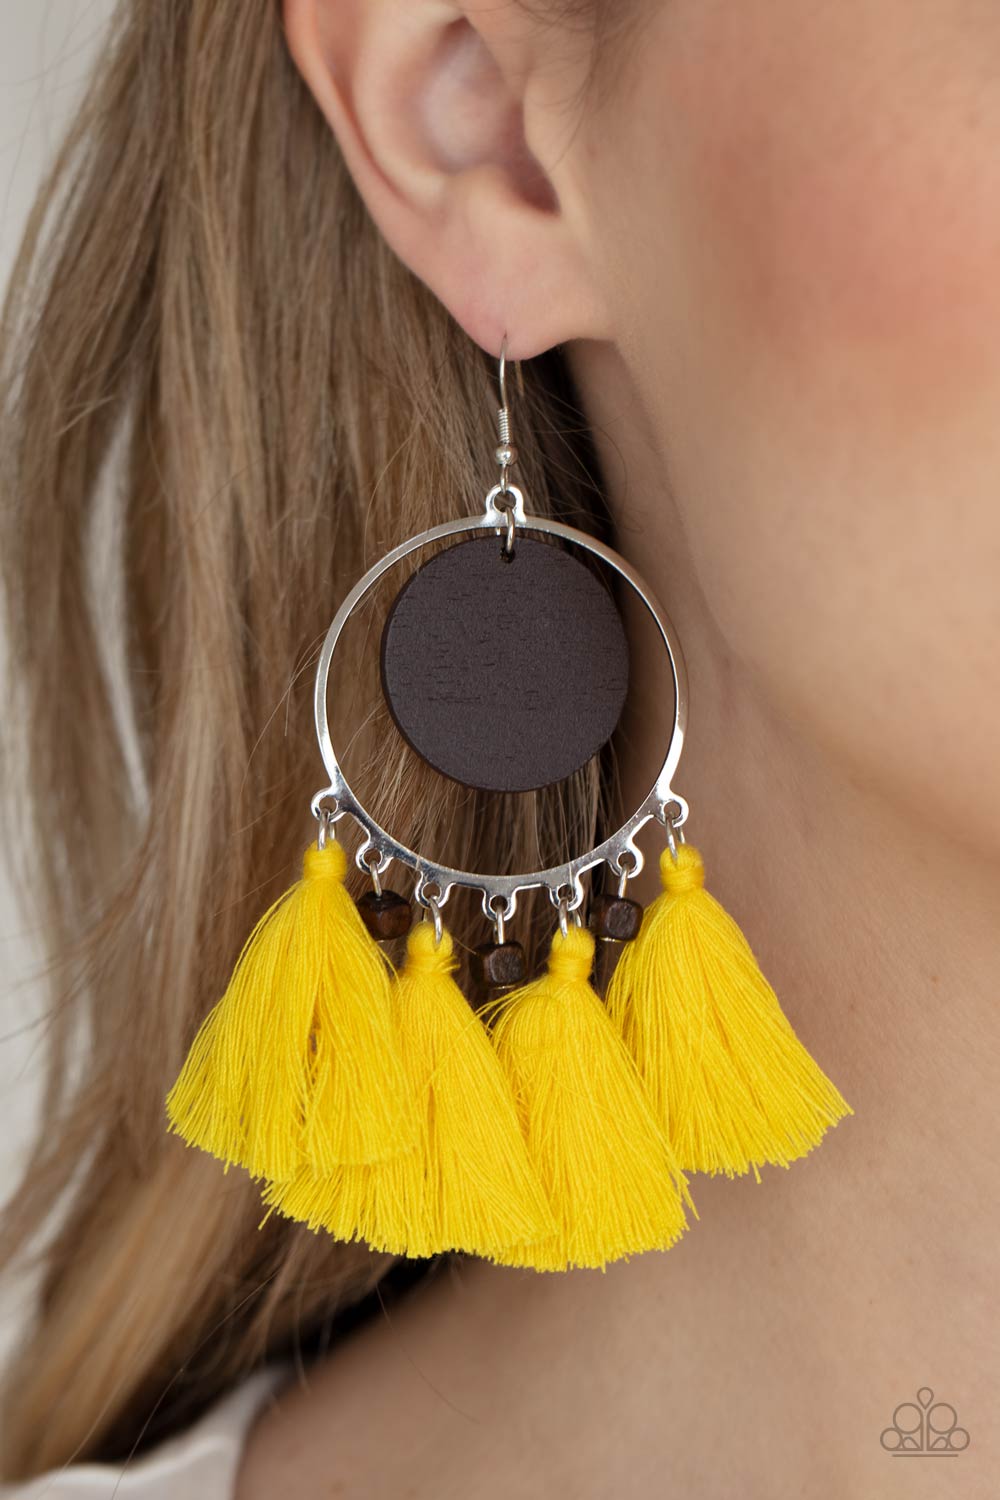 Yacht Bait Yellow Tassel Earrings - Paparazzi Accessories- lightbox - CarasShop.com - $5 Jewelry by Cara Jewels